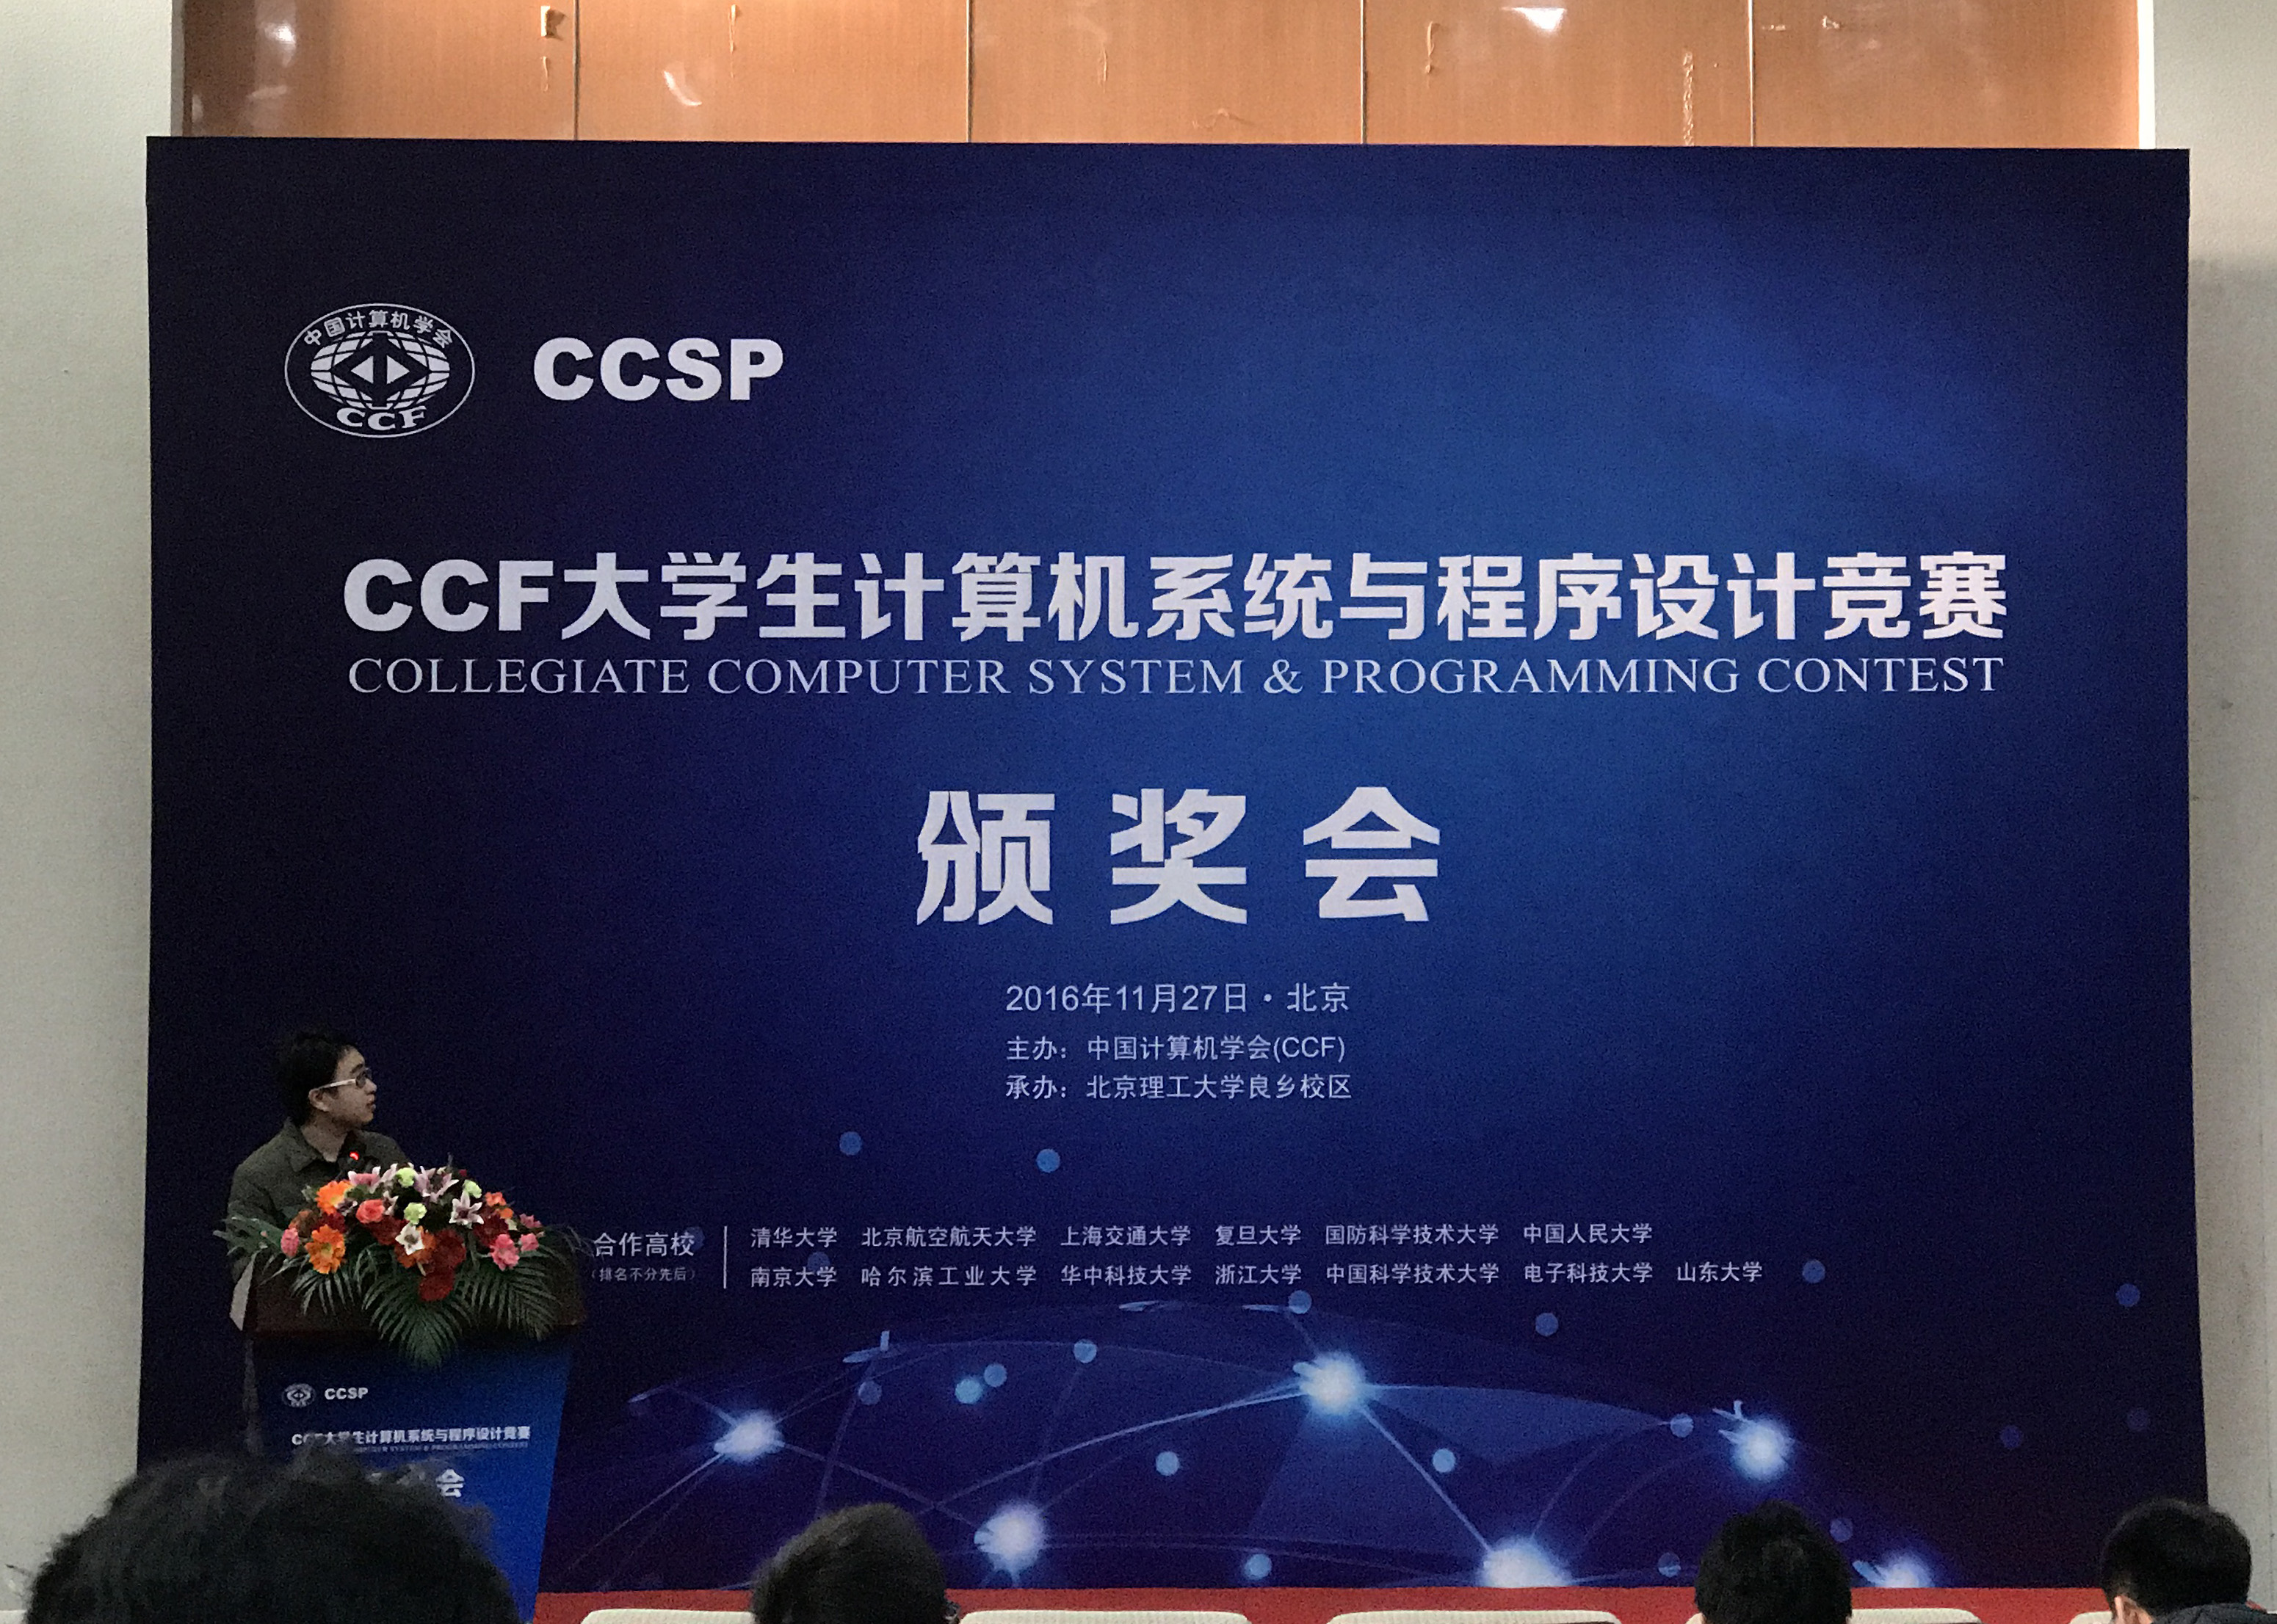 CCSP(大學生計算機系統與程式設計競賽)